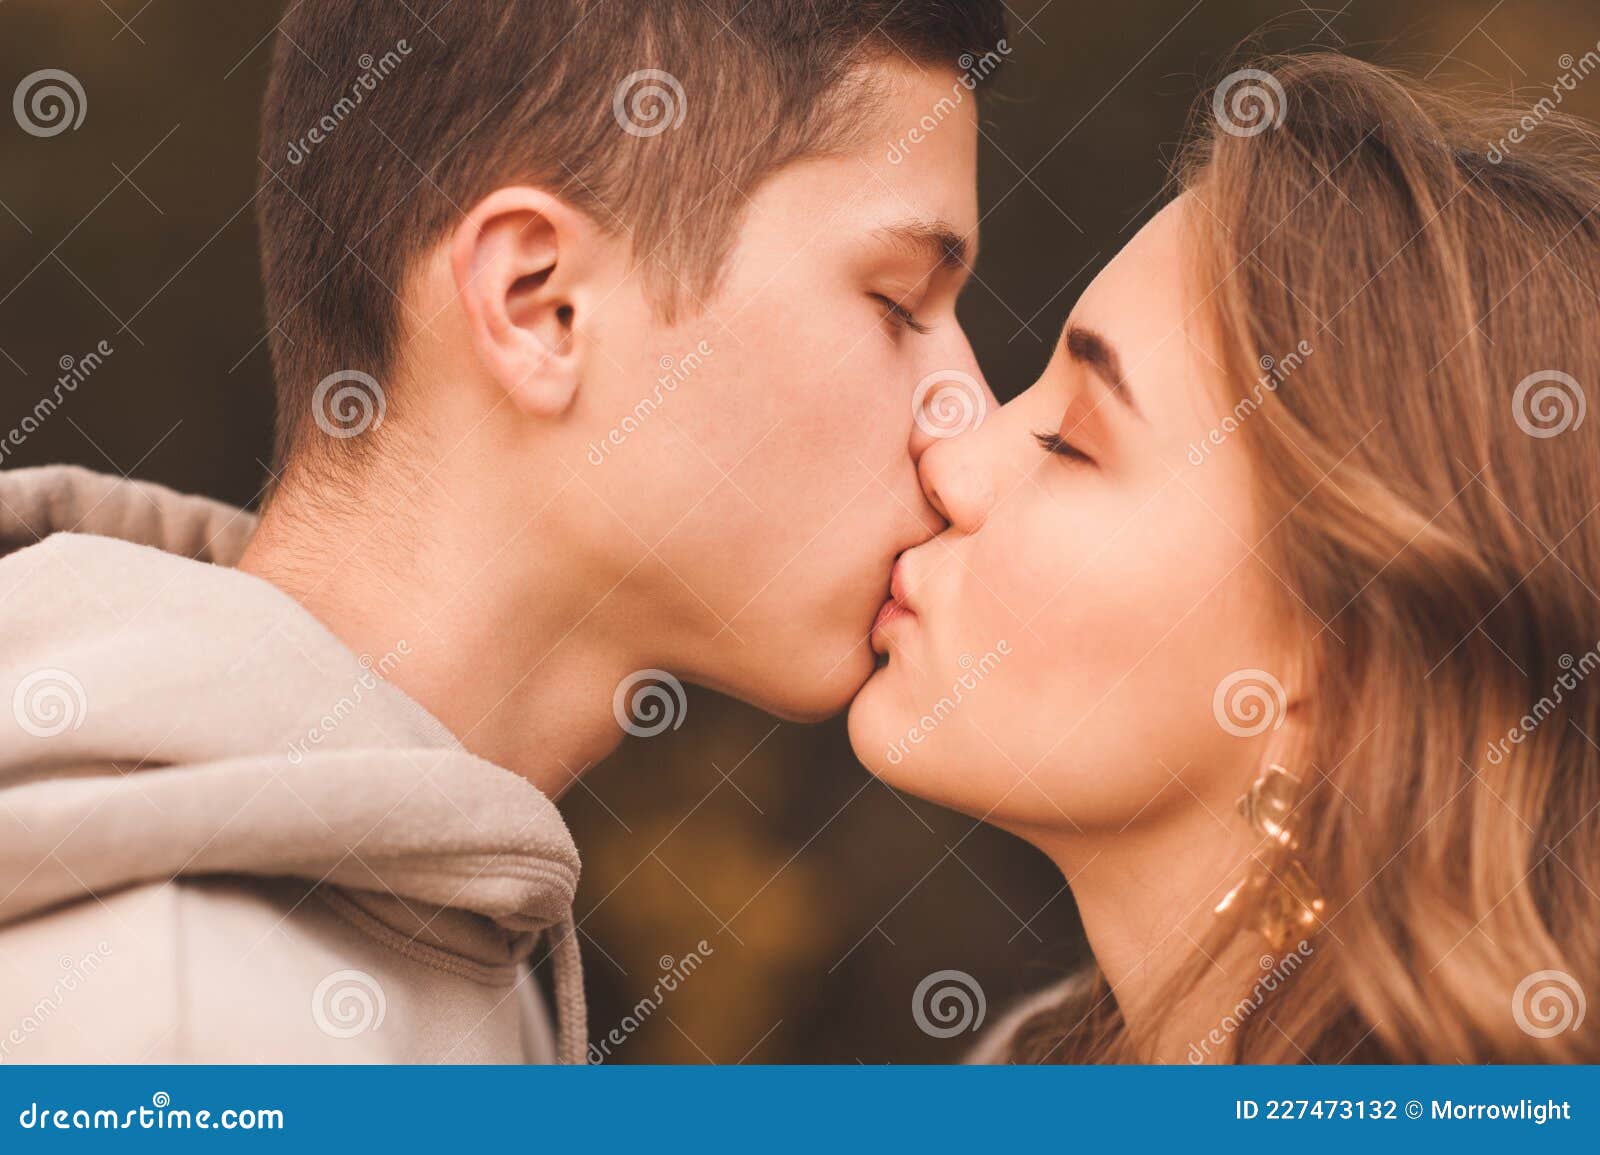 charles siciliano add photo boy girl making love